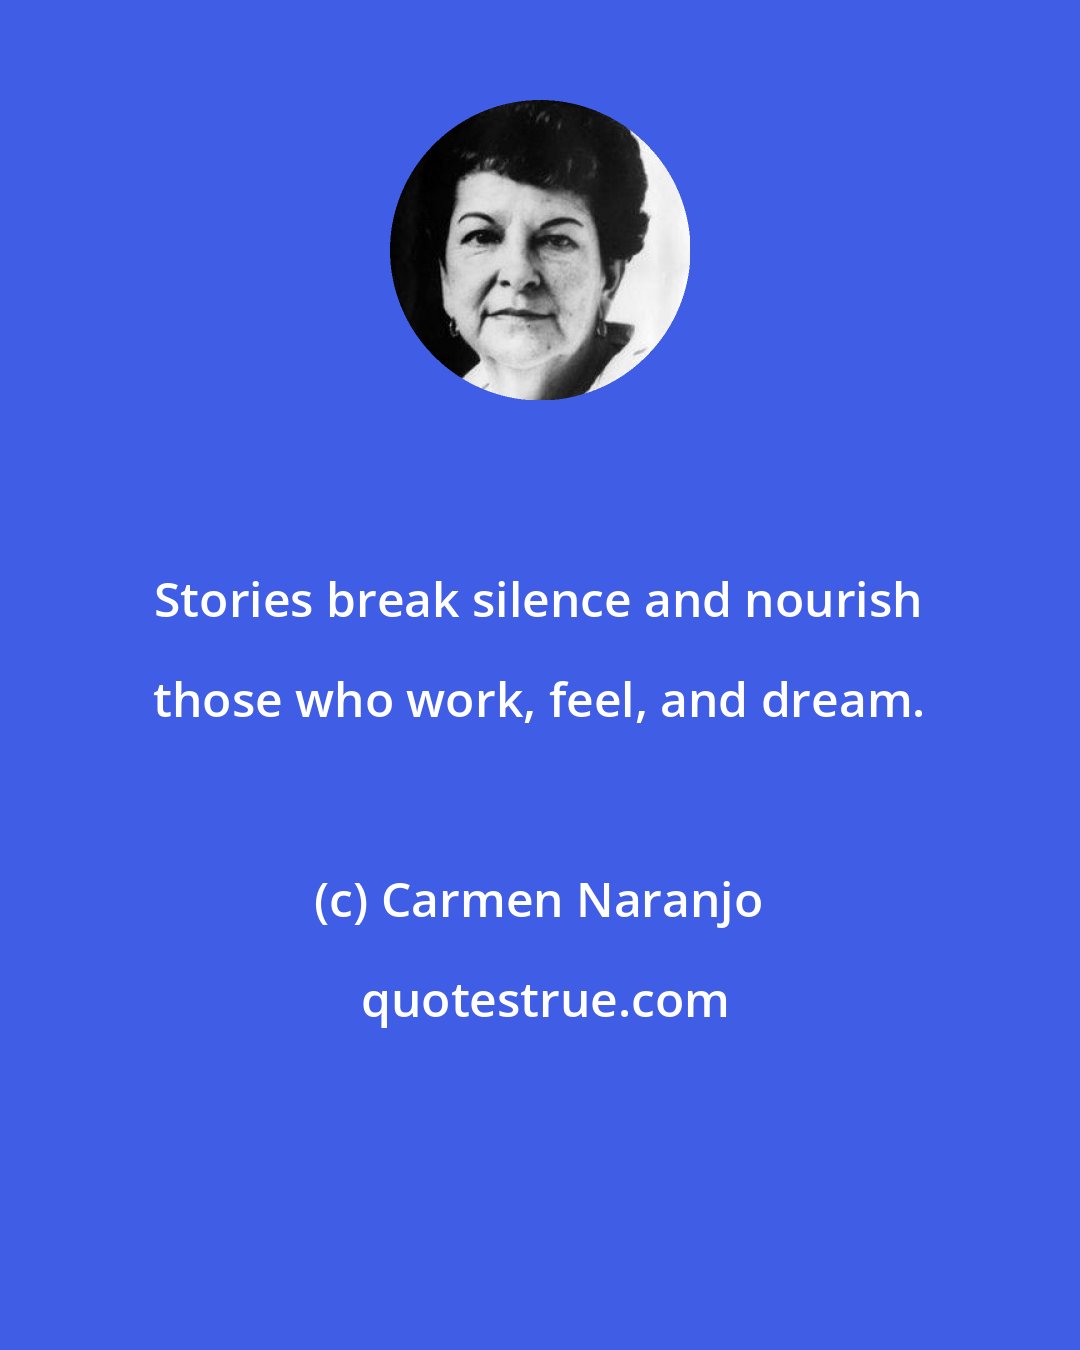 Carmen Naranjo: Stories break silence and nourish those who work, feel, and dream.